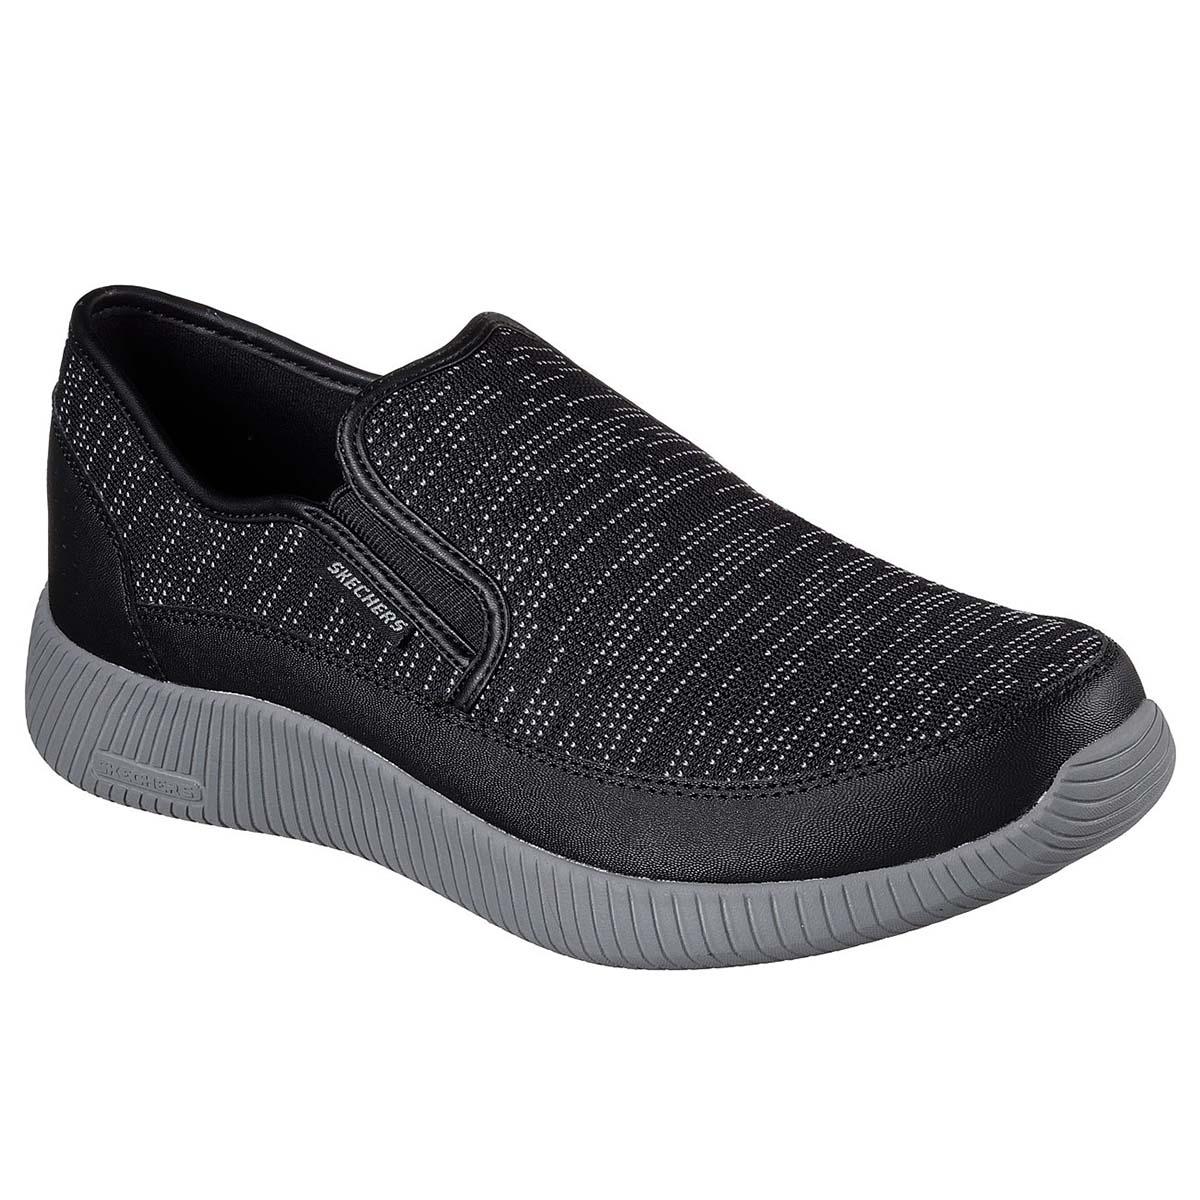 Buy Skechers Air Cooled Memory Foam Mens Shoes (Black/Charcoal) Online